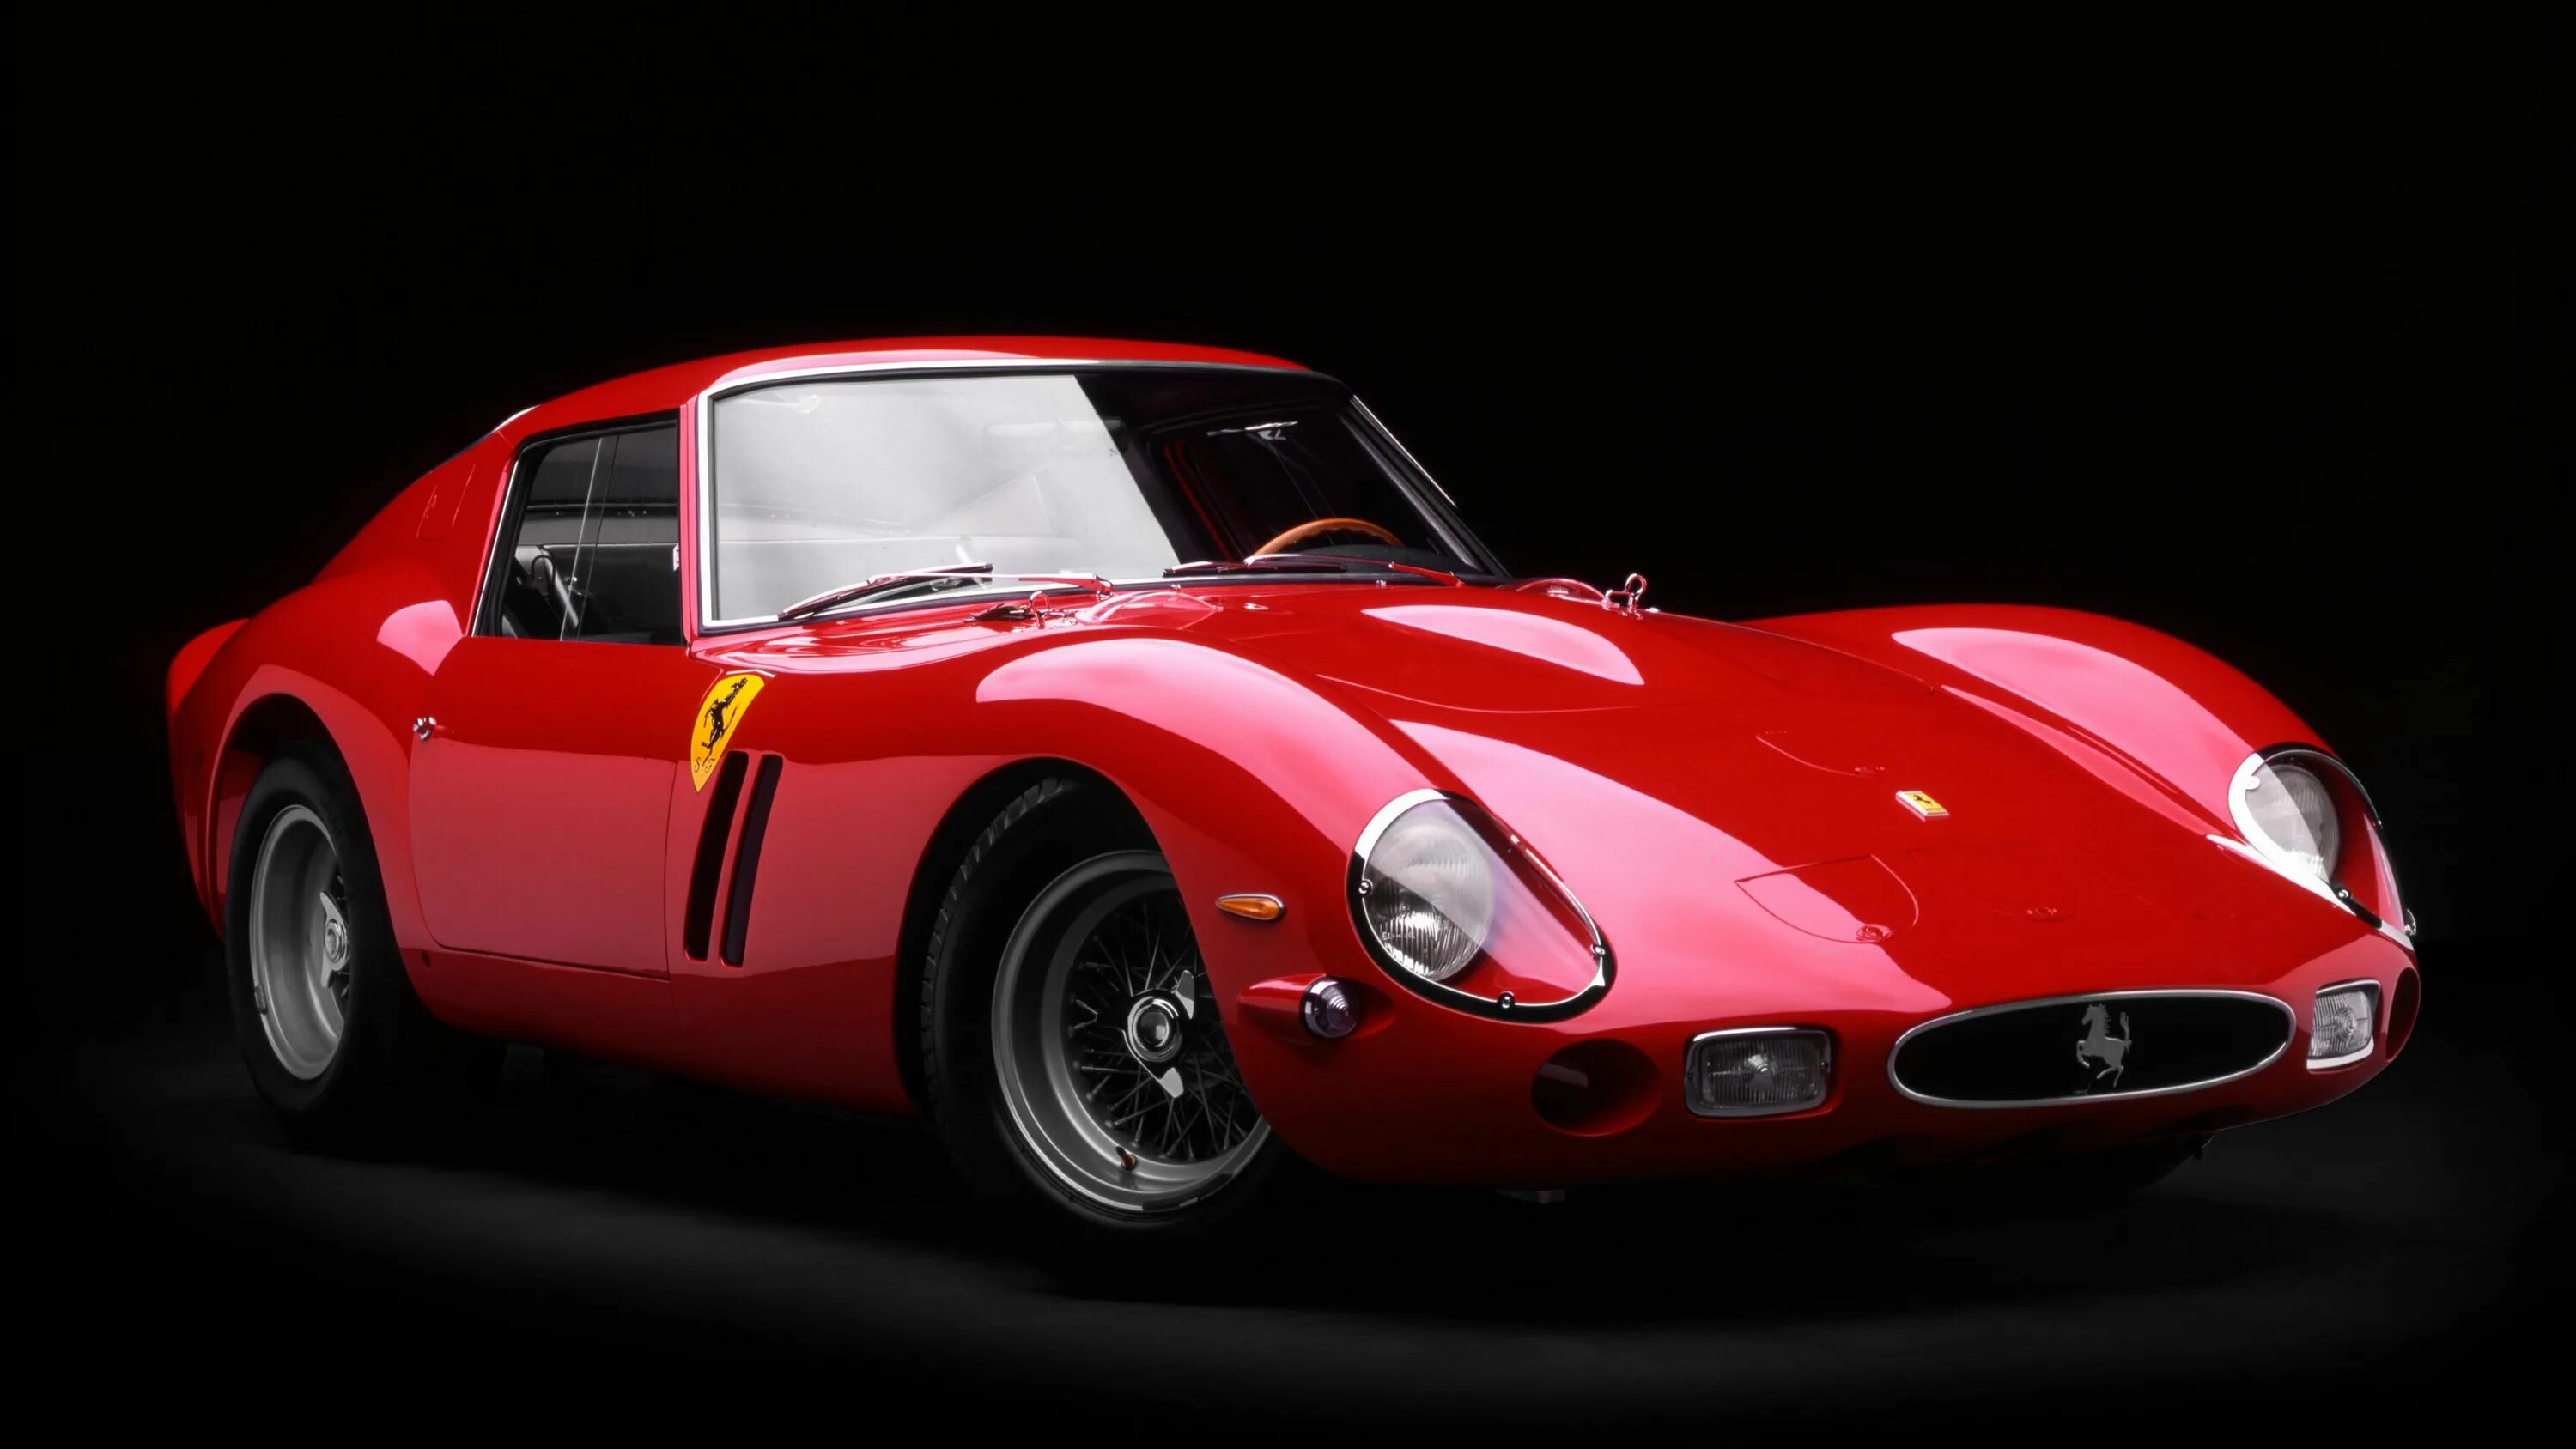 Ferrari gto 1962. Ferrari 250 GTO. Ferrari 250 GTO 1963. Ferrari 250 GTO 1962. Ferrari 250 GTO 1962 года.